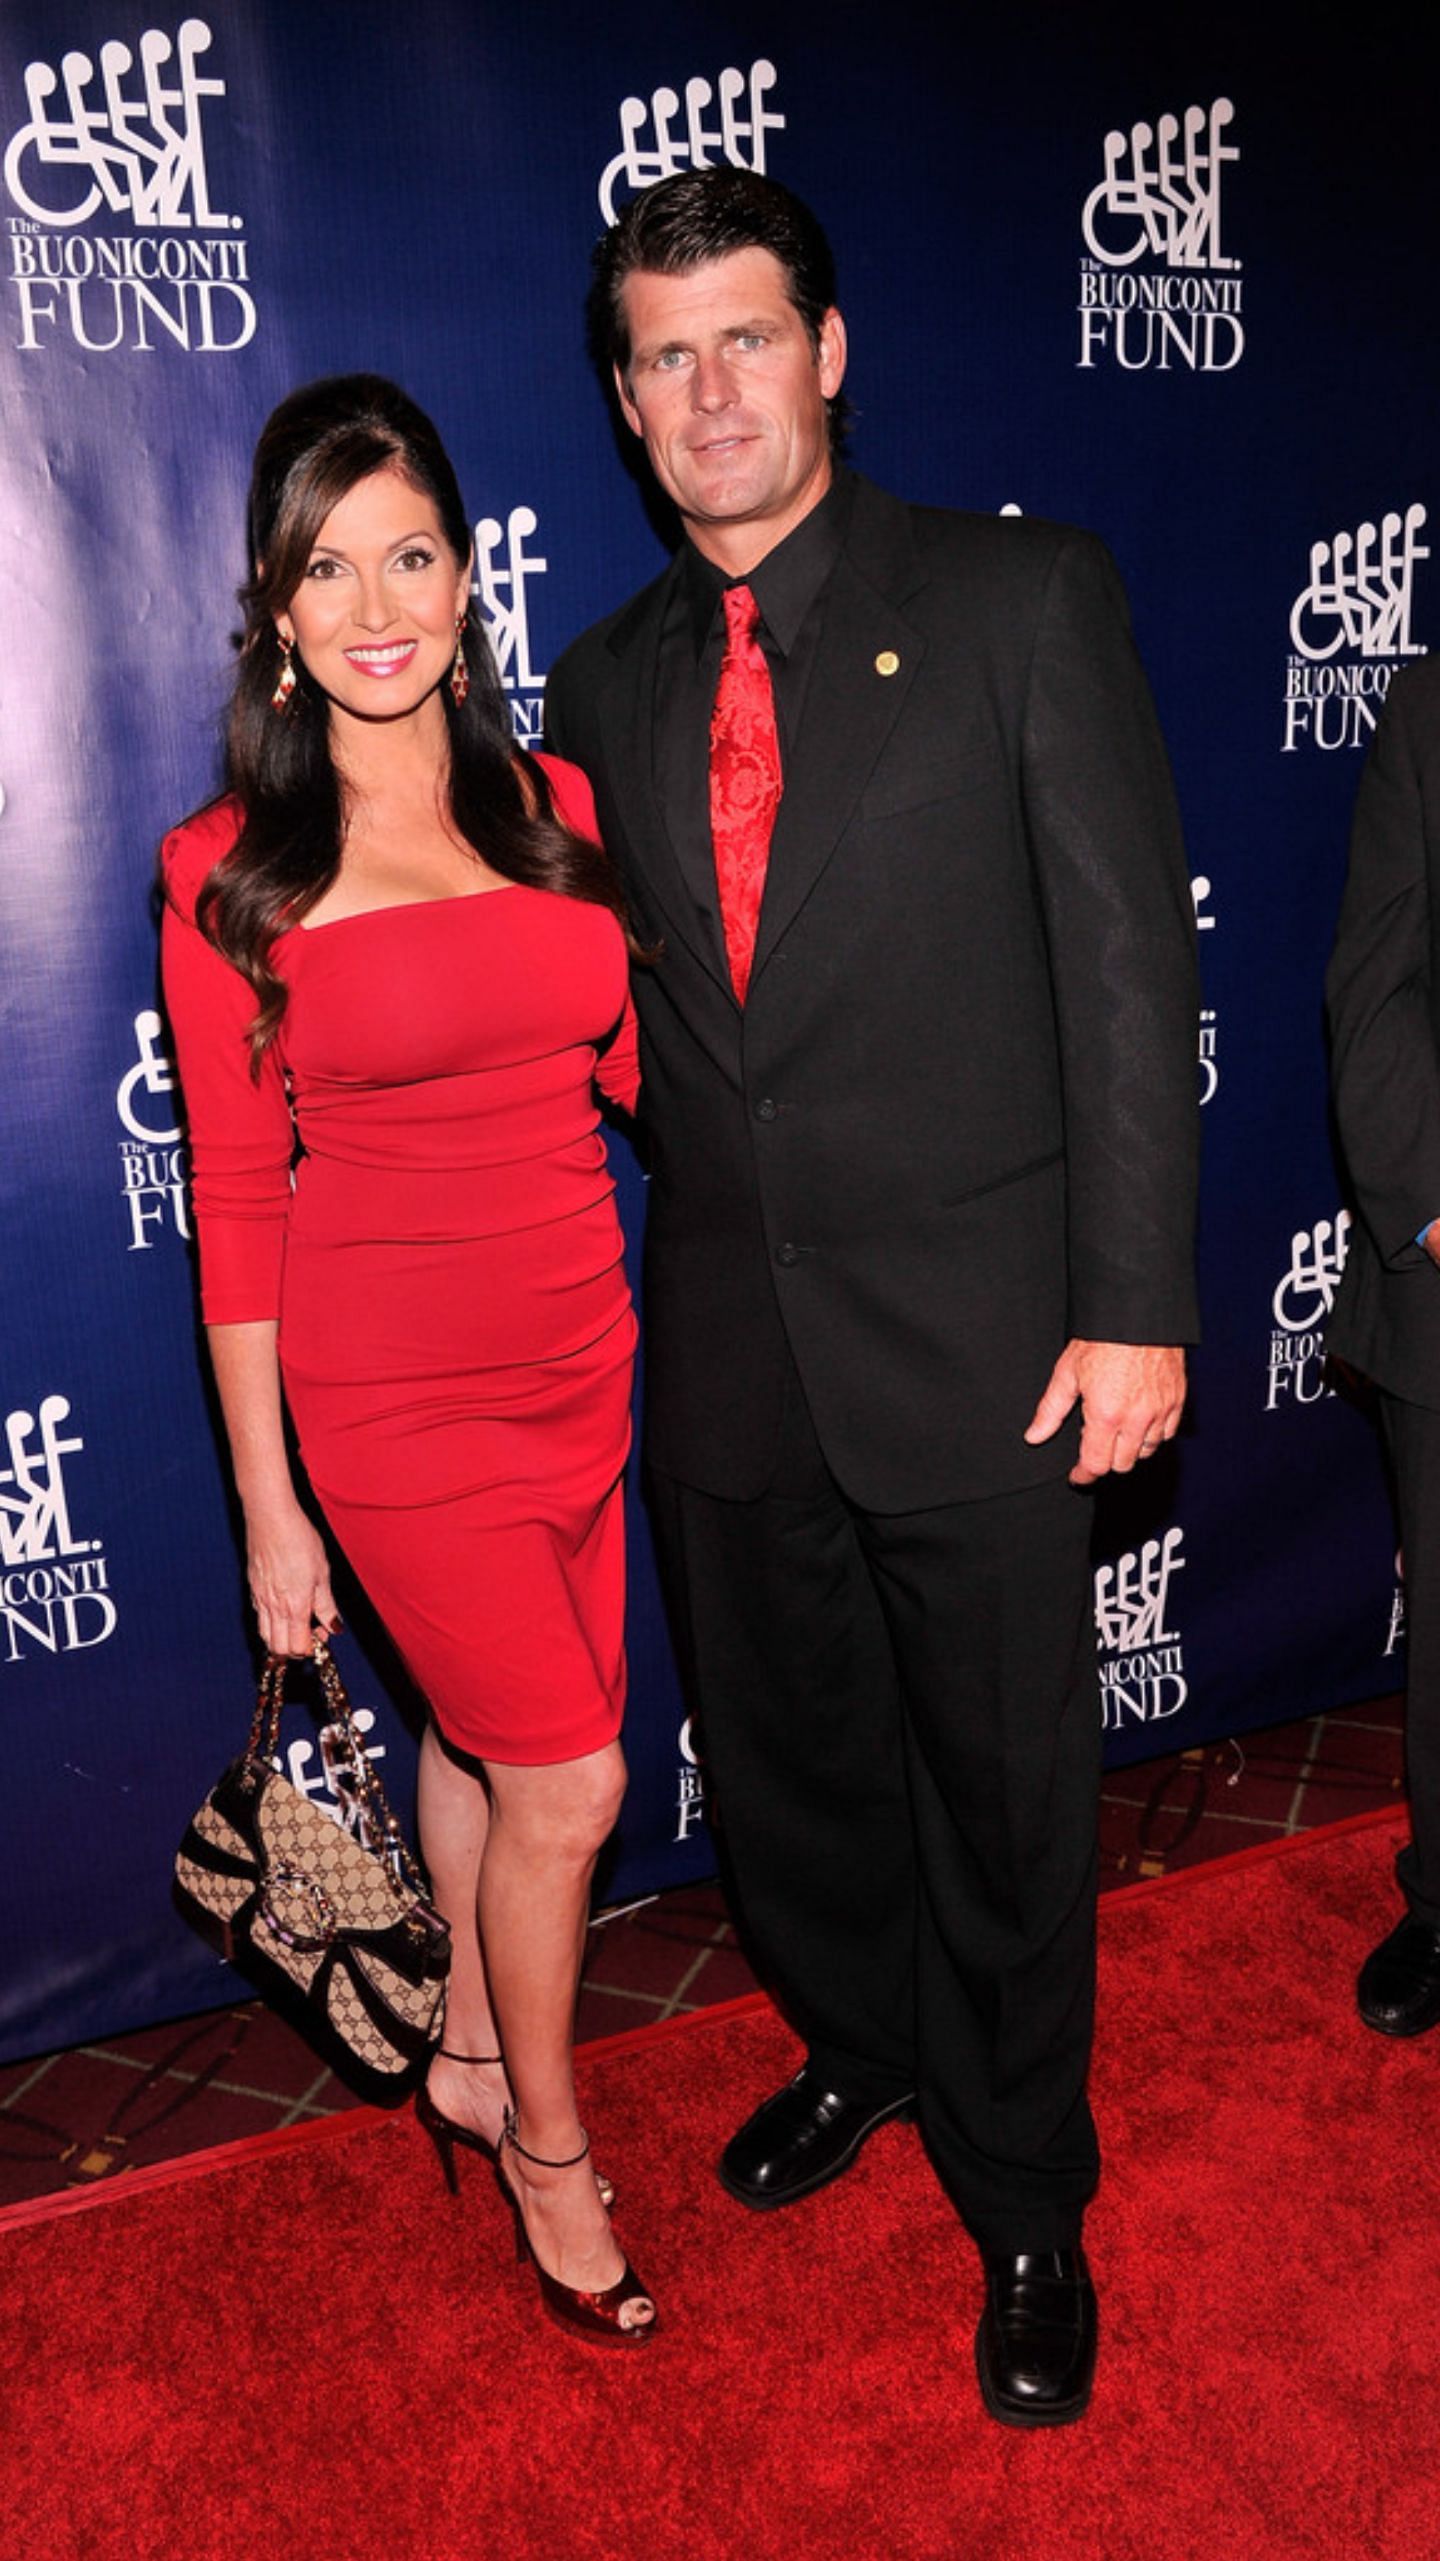 Lisa Guerrero and Scott Erickson (Image via Getty Images)